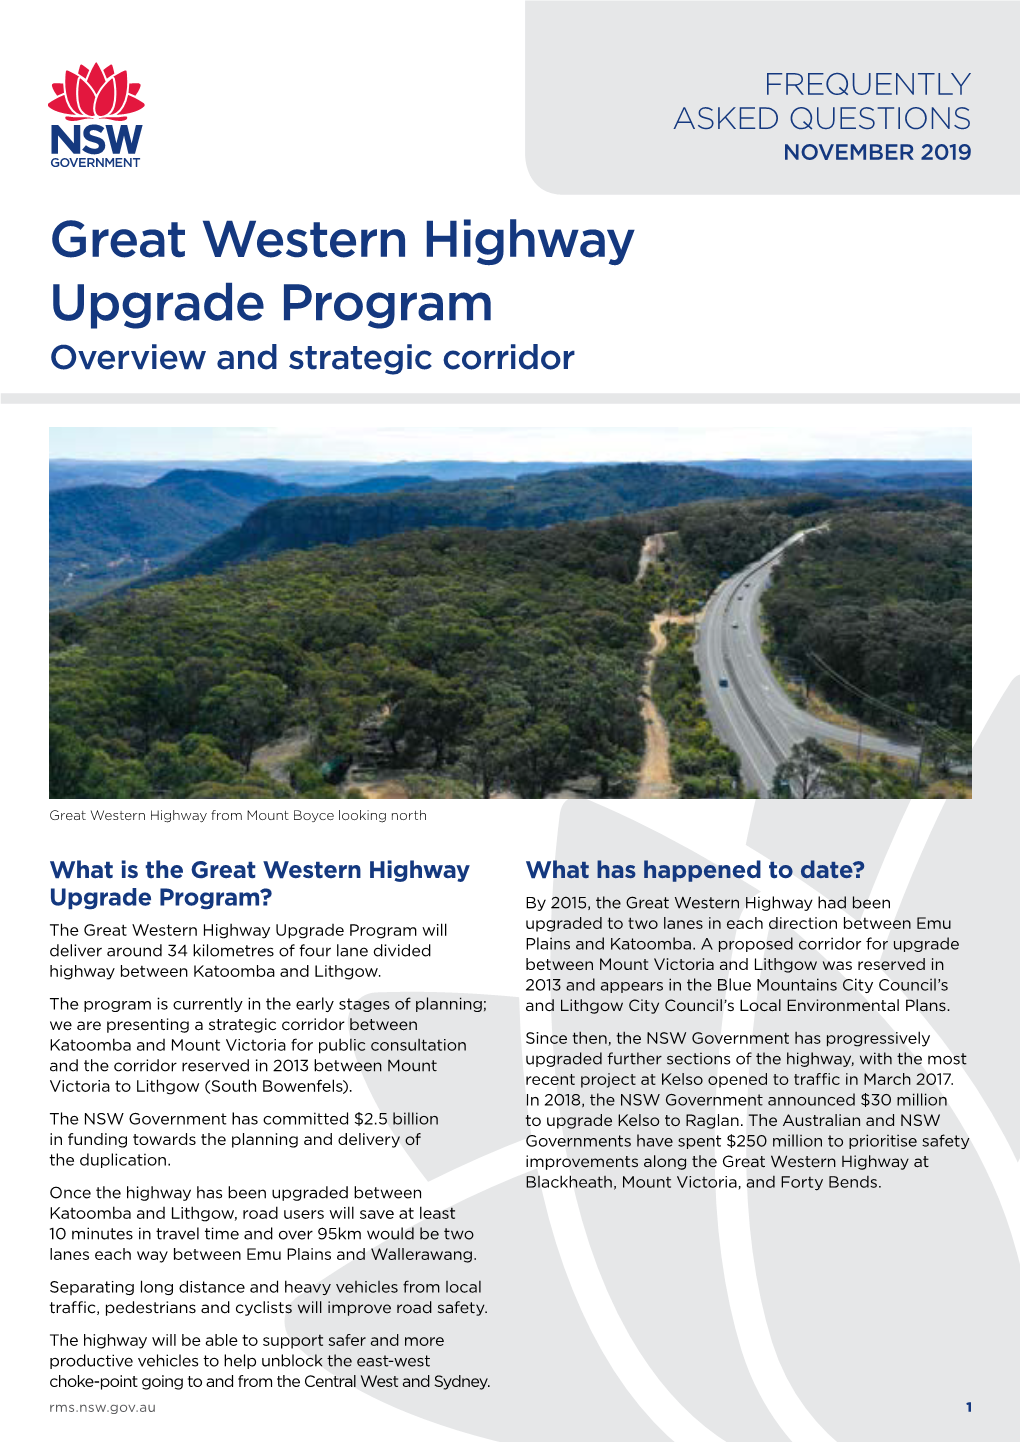 Great Western Highway Upgrade Program Overview and Strategic Corridor